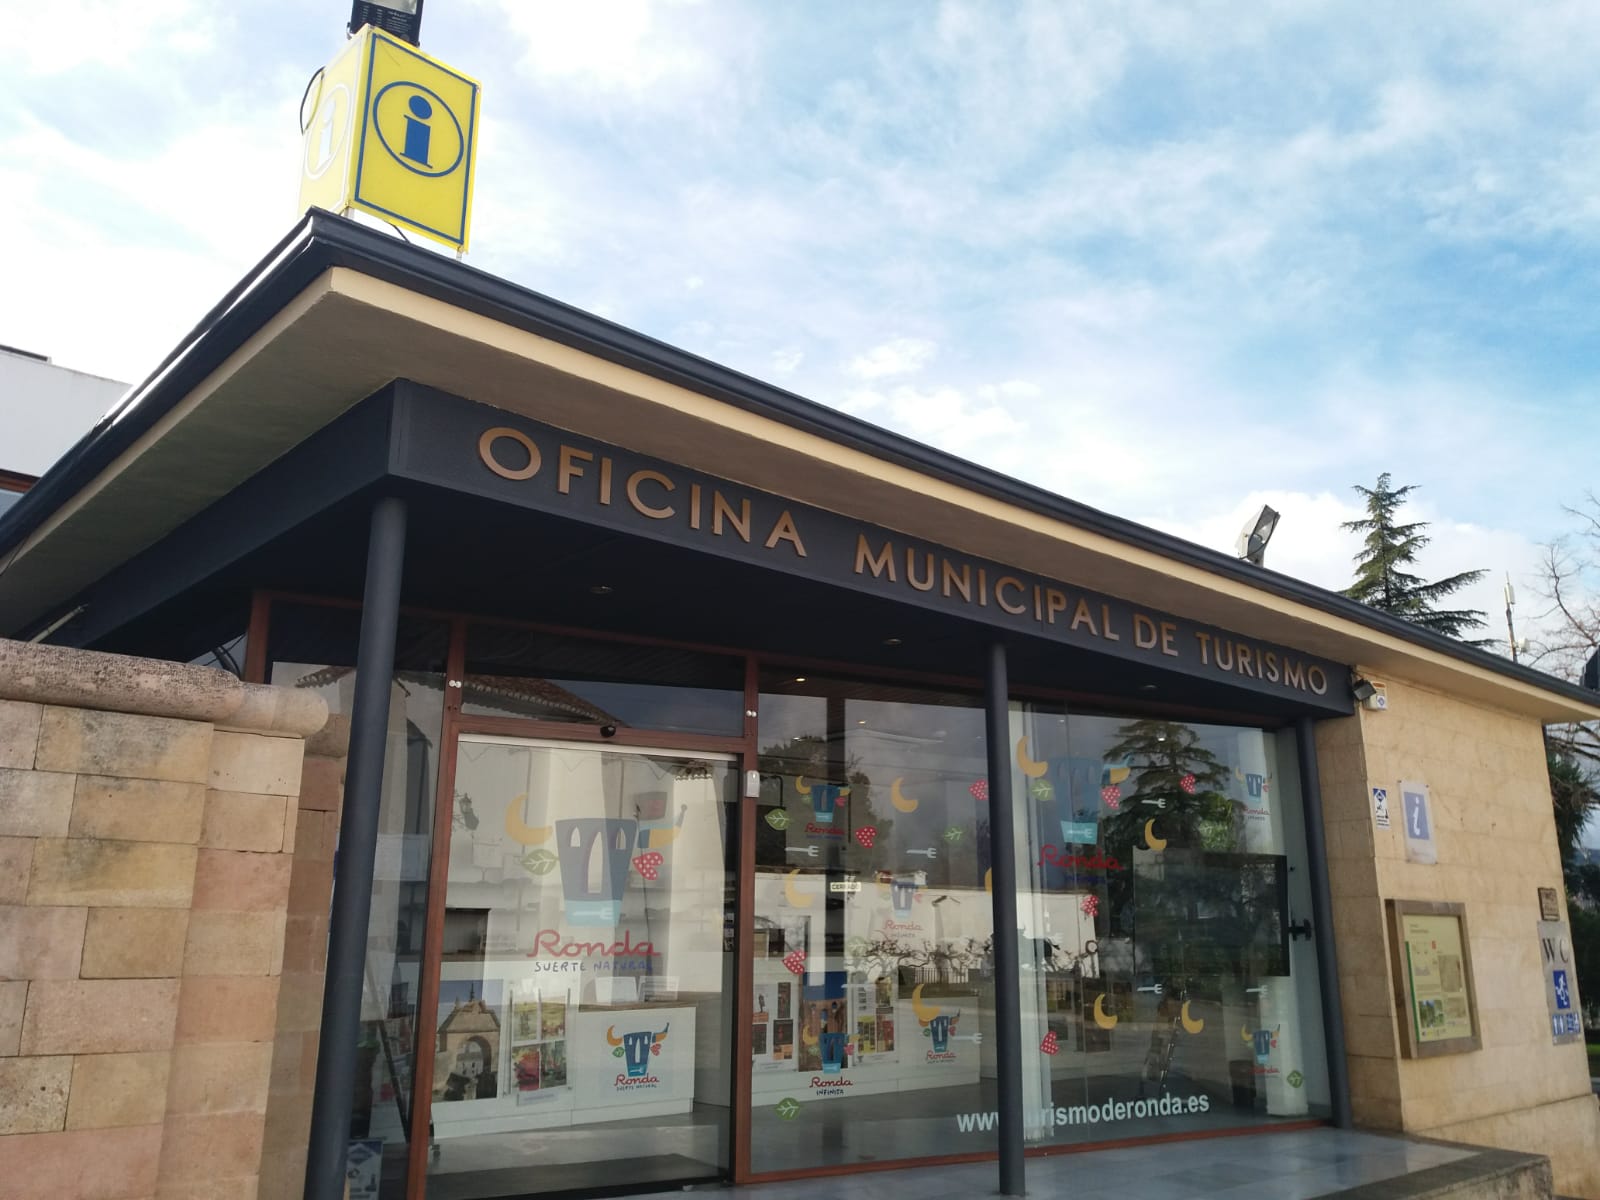 Oficina Municipal de Turismo de Ronda